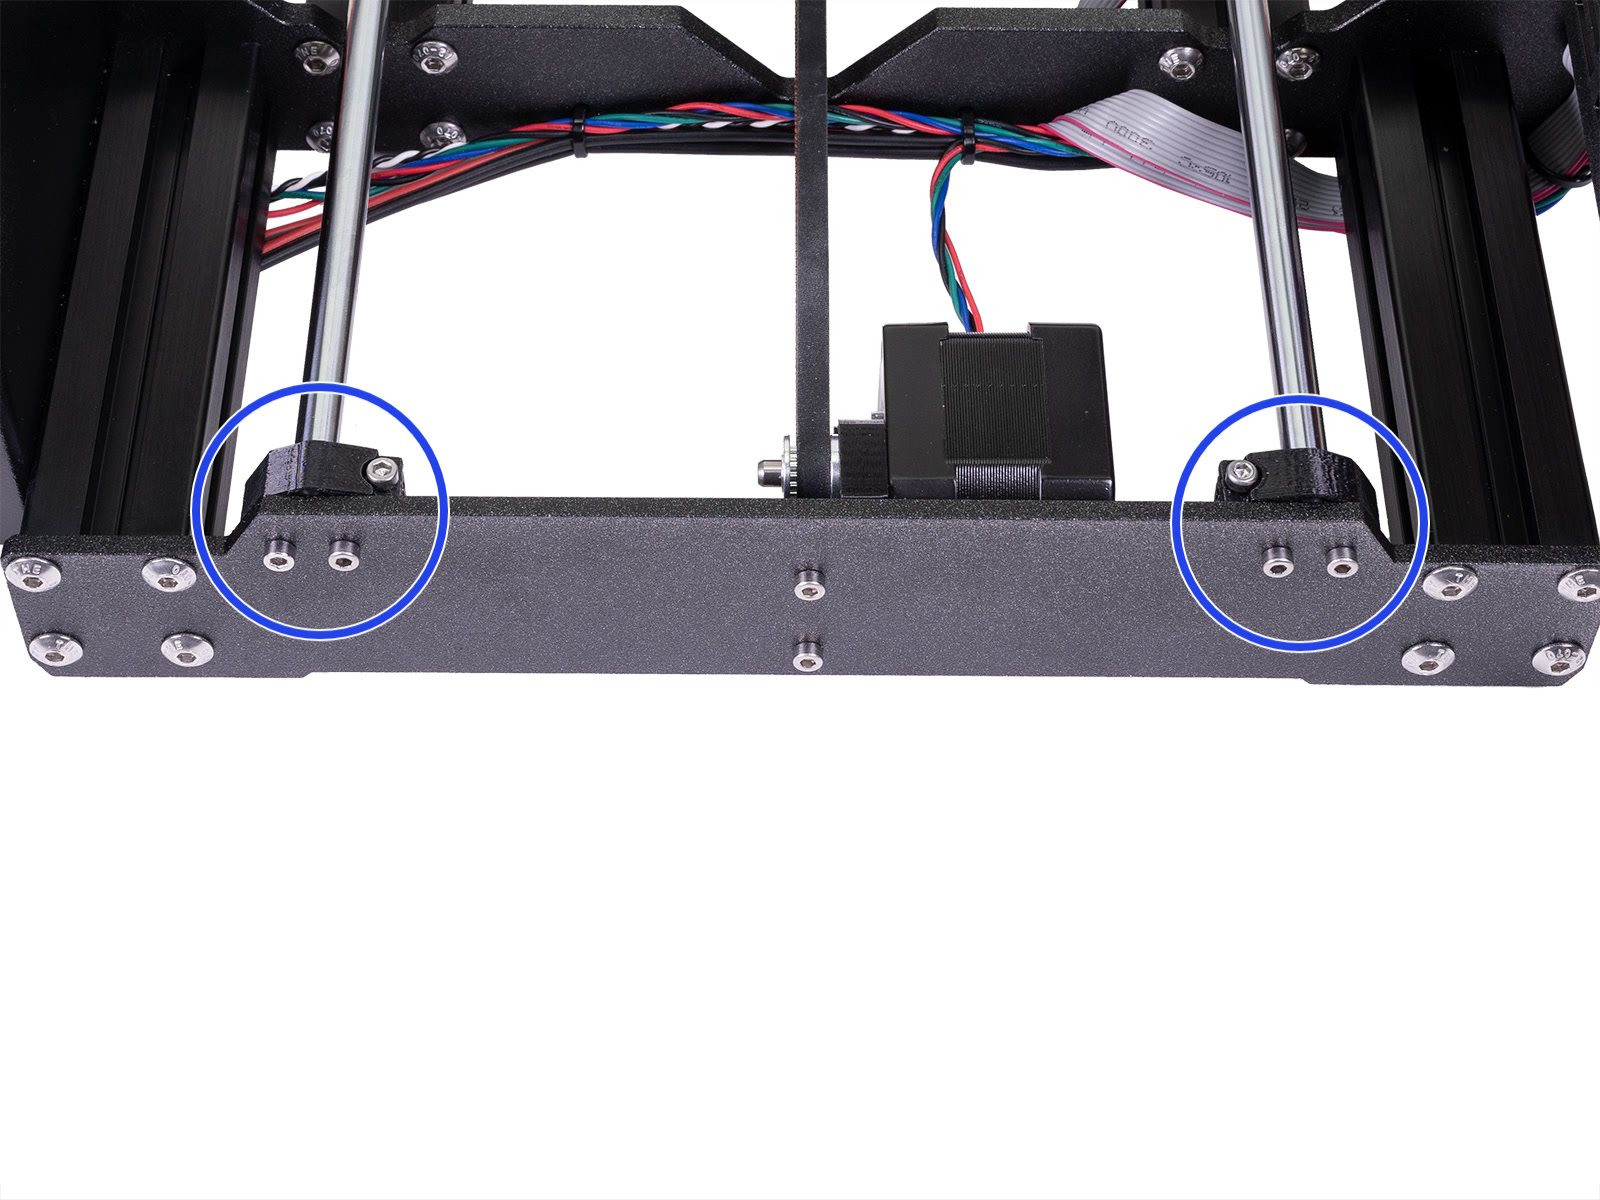 New Y-rod holders installation (rear side)